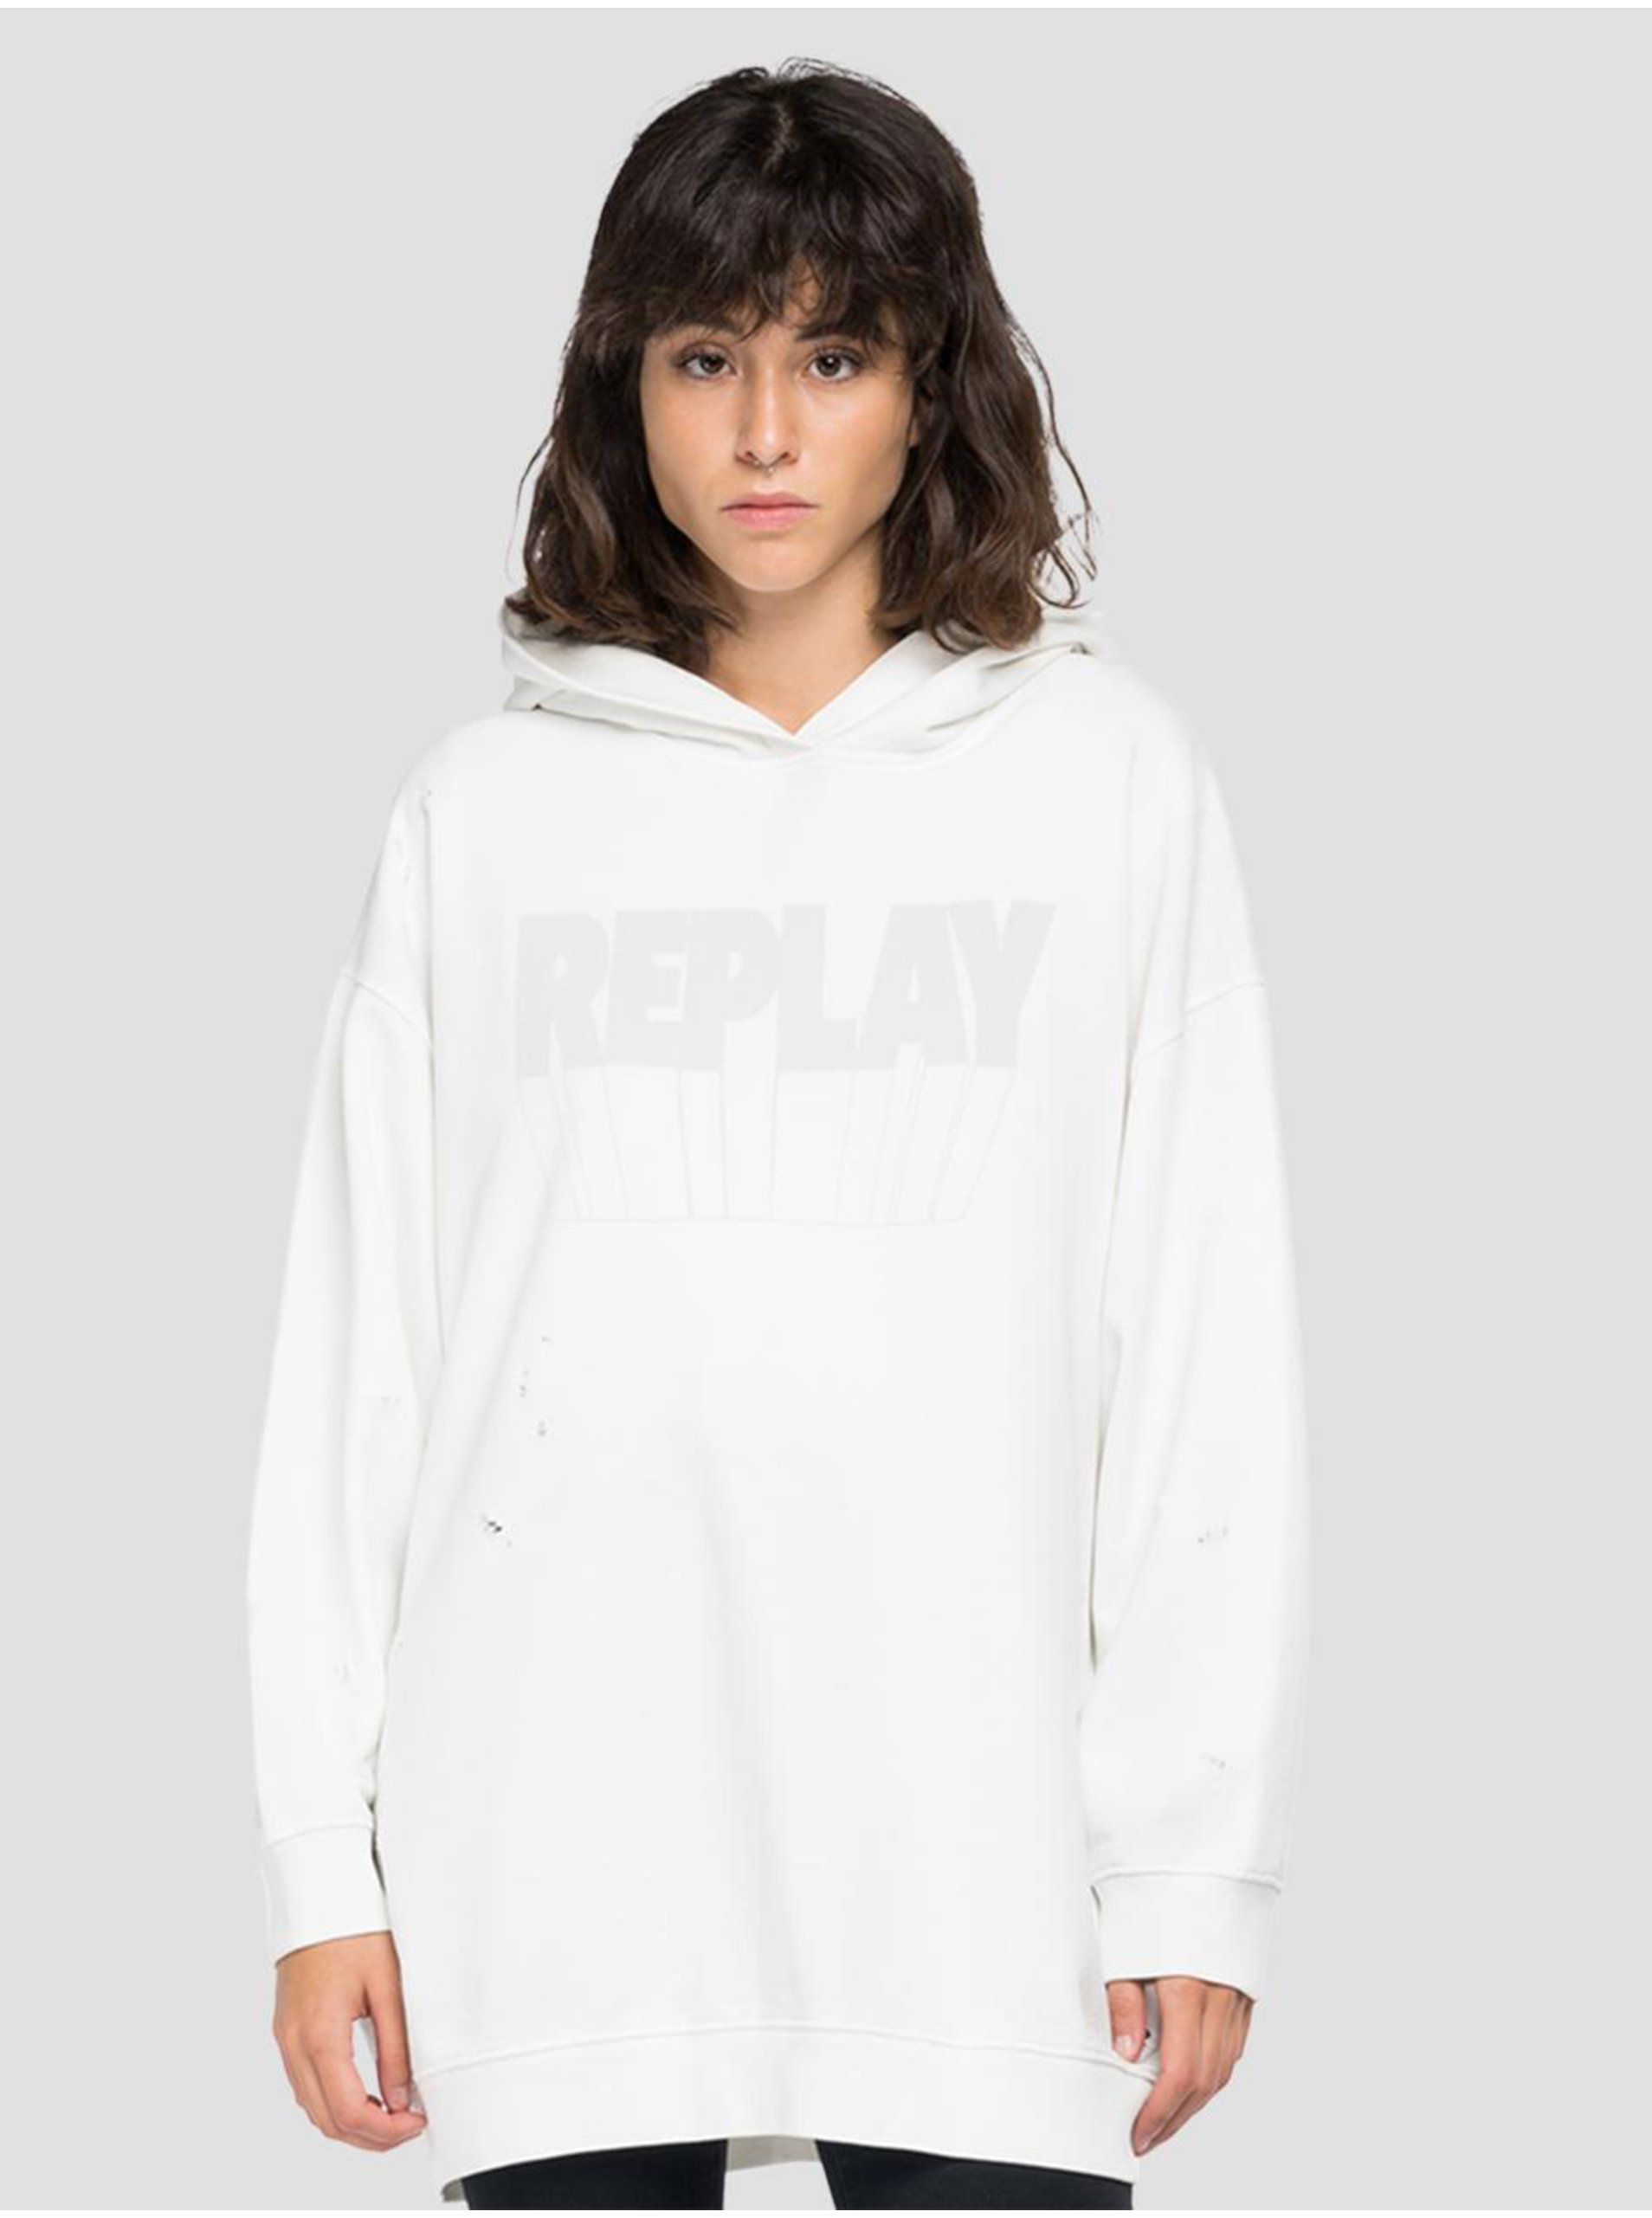 White Women's Oversize Sweatshirt with Torn Replay Effect - Women